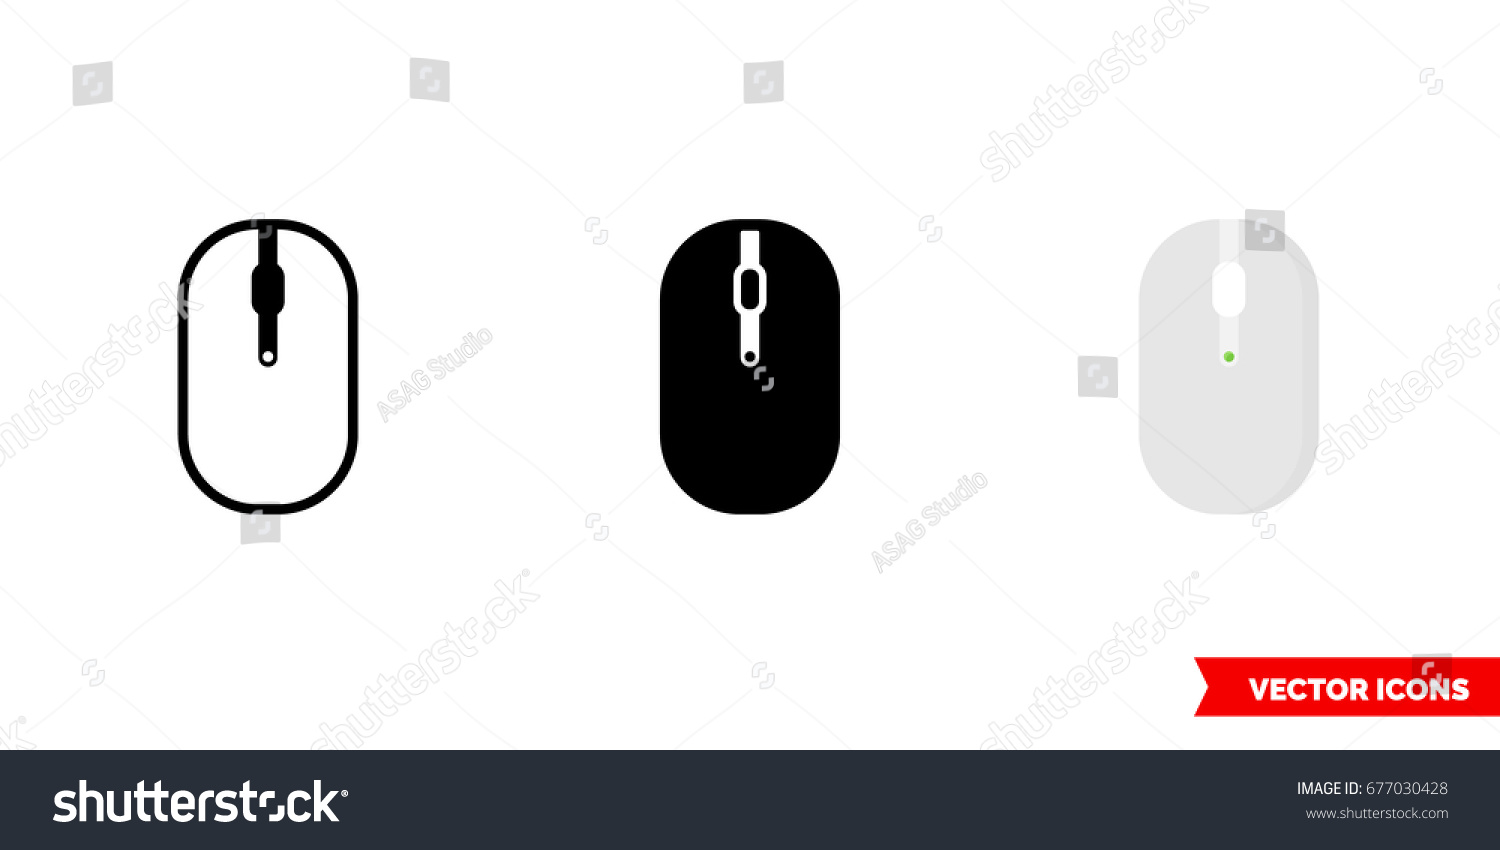 Clicker icons | Noun Project